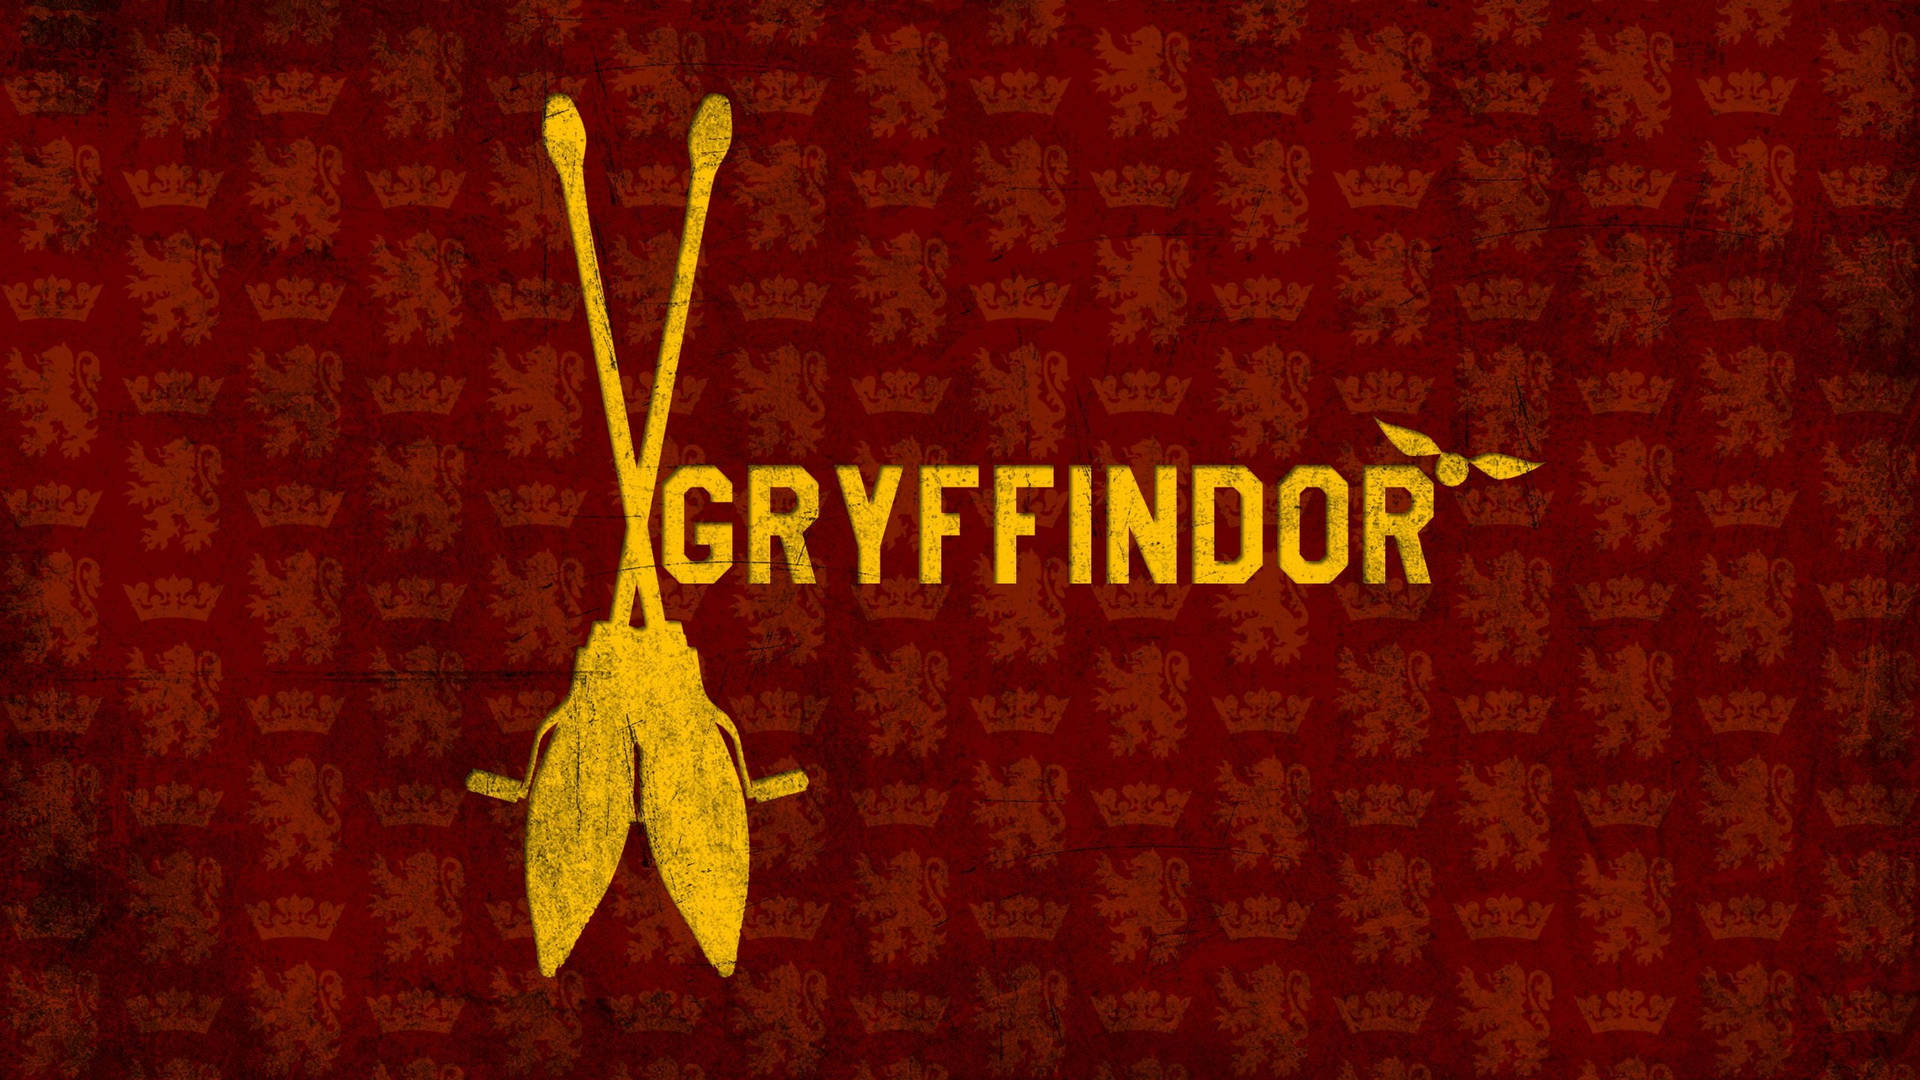 Cool Harry Potter Gryffindor Quidditch Wallpaper